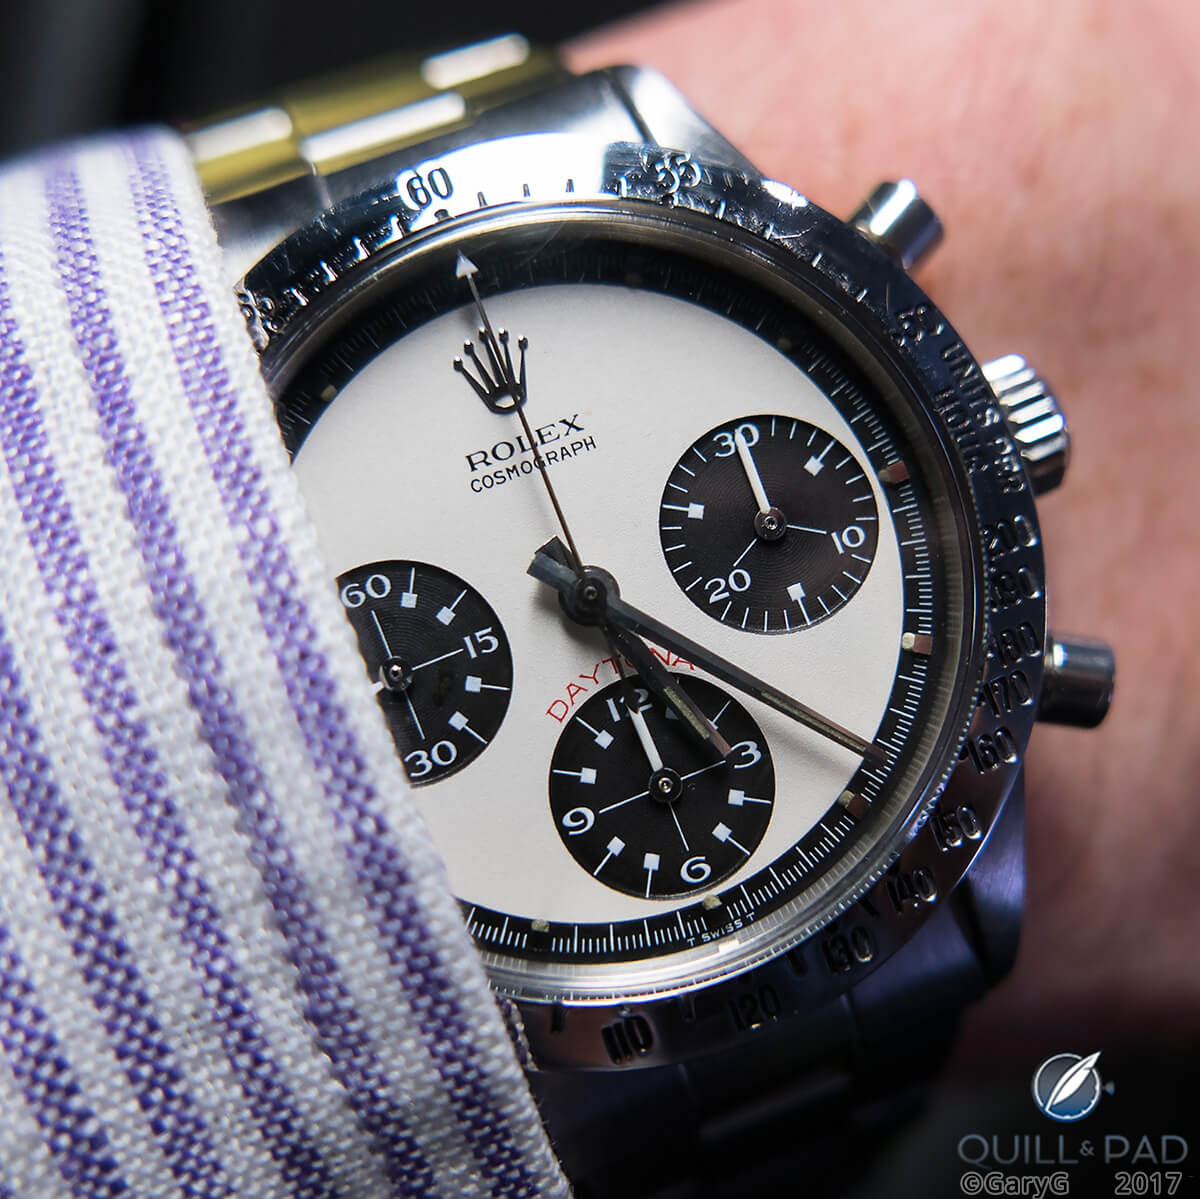 Rolex Daytona “Paul Newman” on the author’s wrist